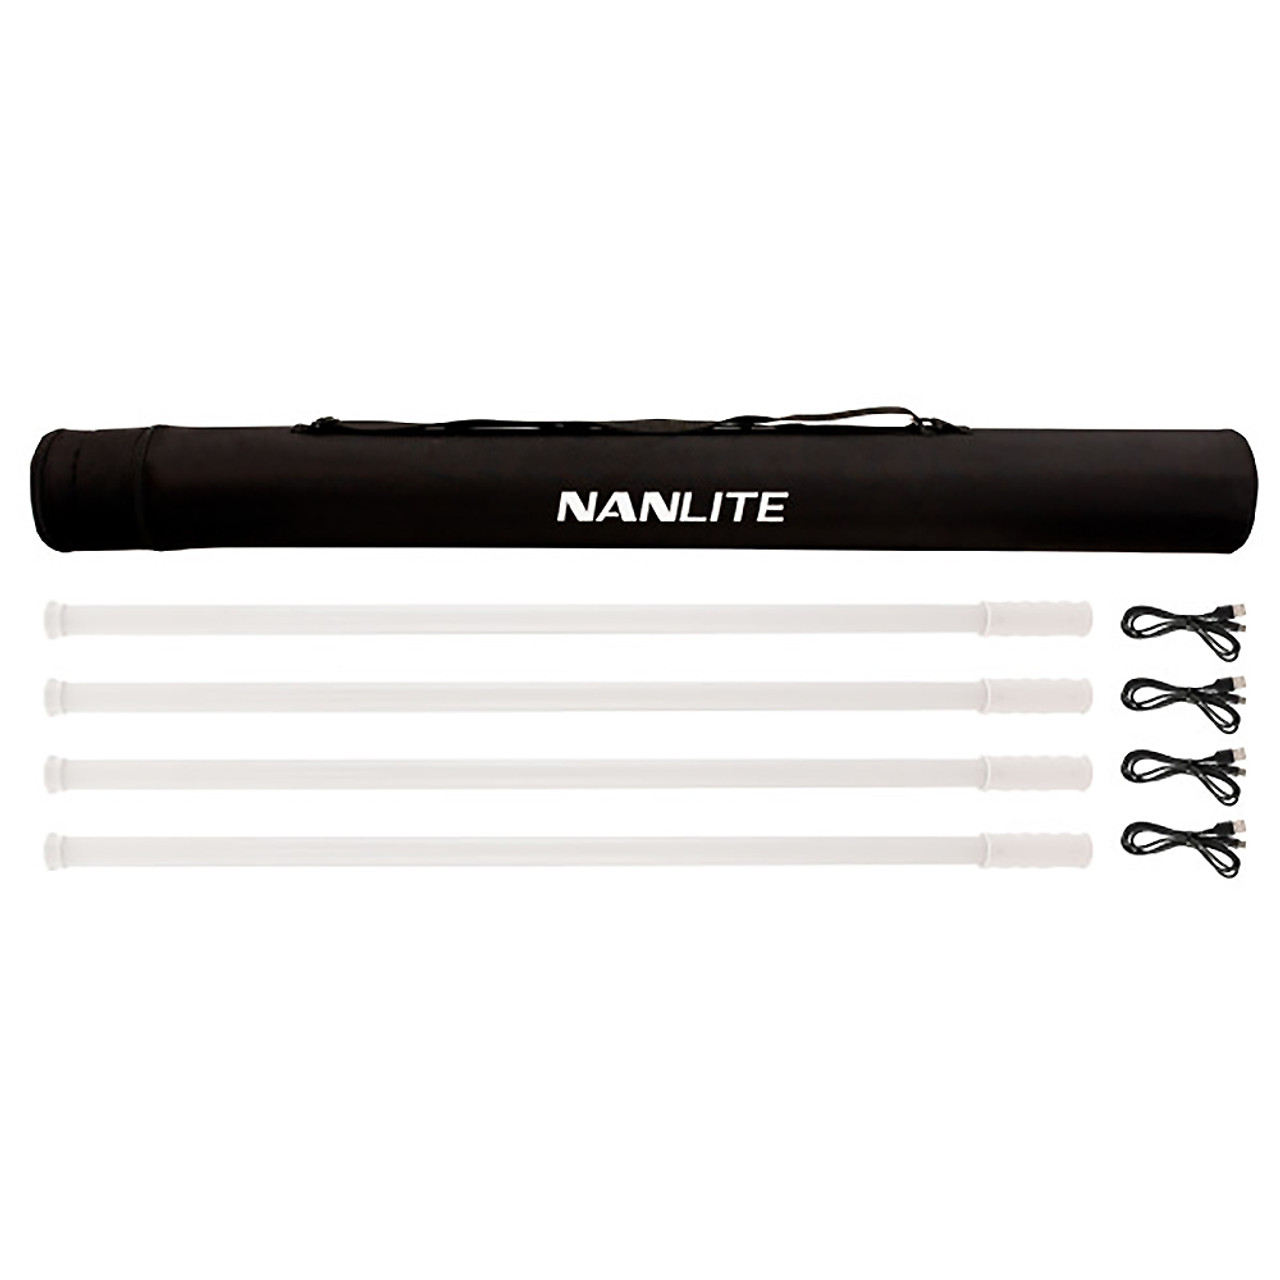 NANLITE PAVOTUBE T8-7X LED TUBE 4-KIT